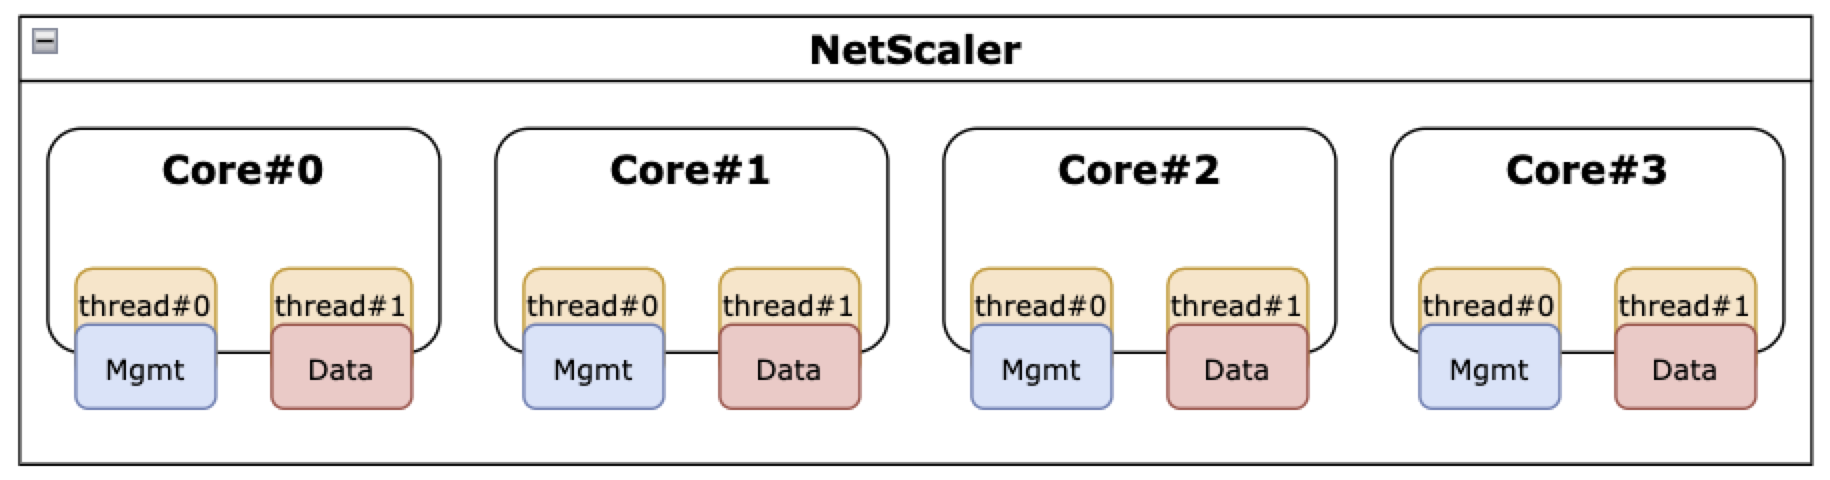 NetScaler mit aktivierter SMT-Funktion